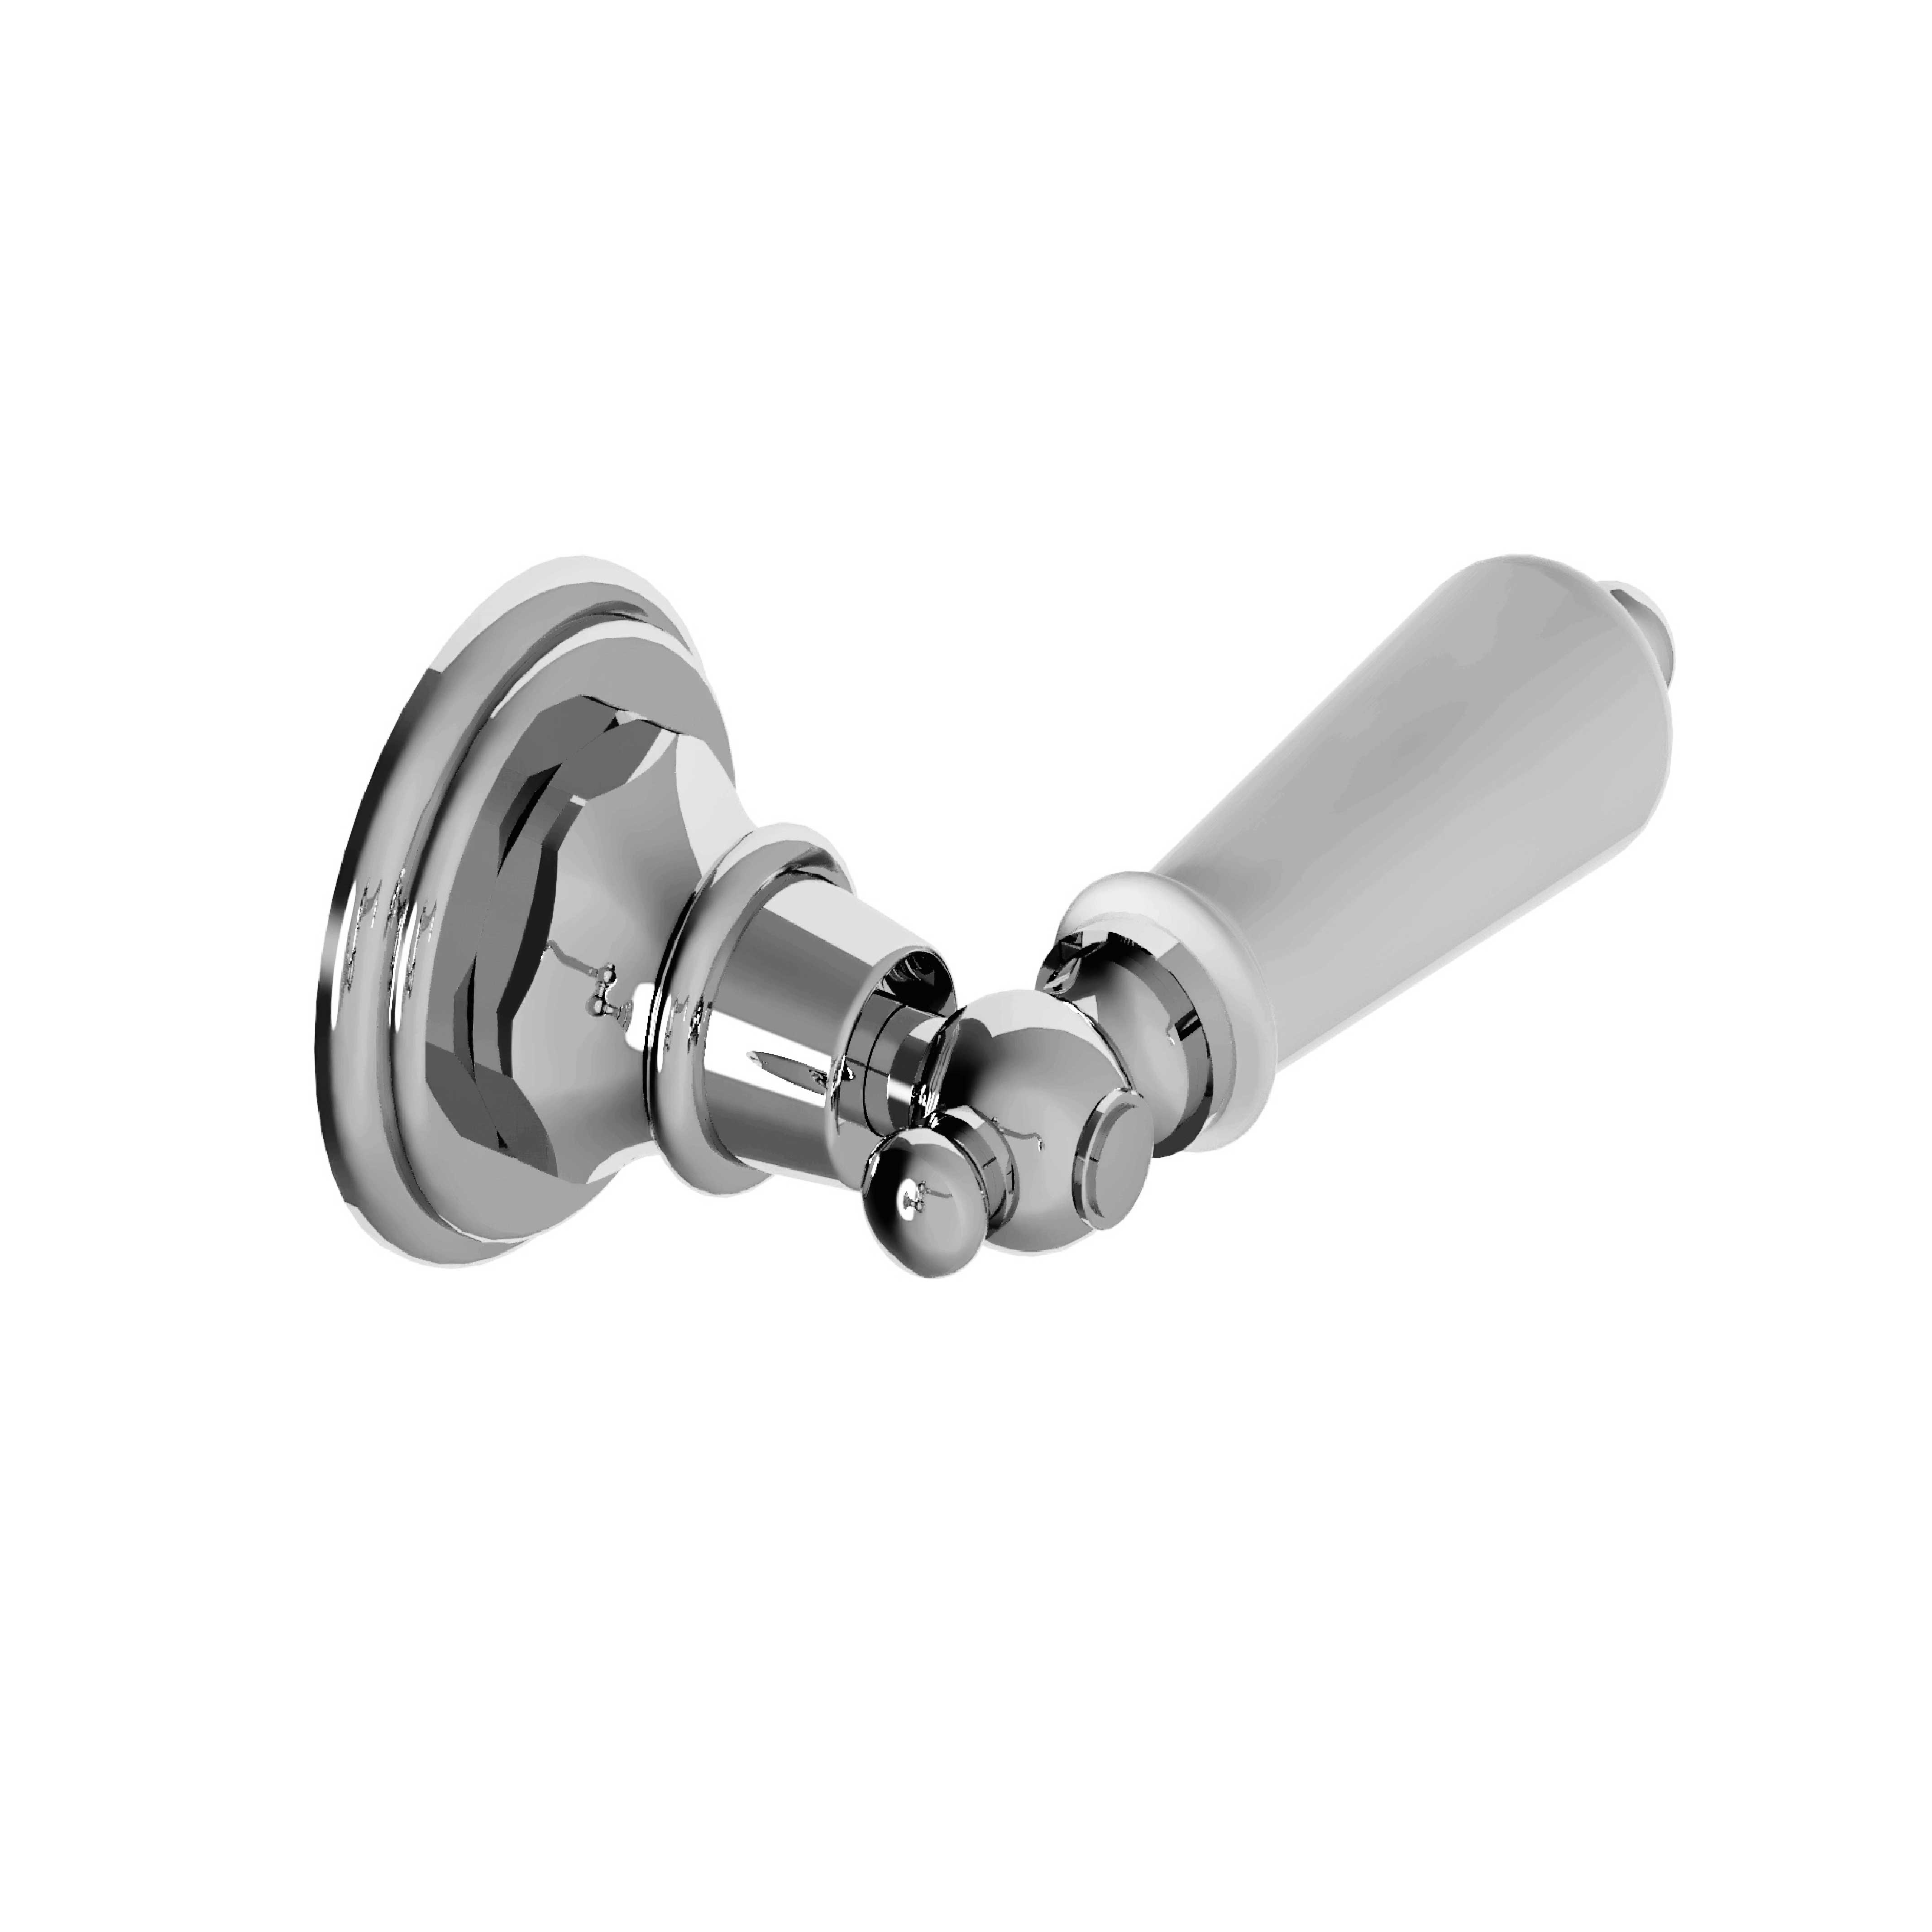 M04-246 Shut-off and diverter valve 1/2″